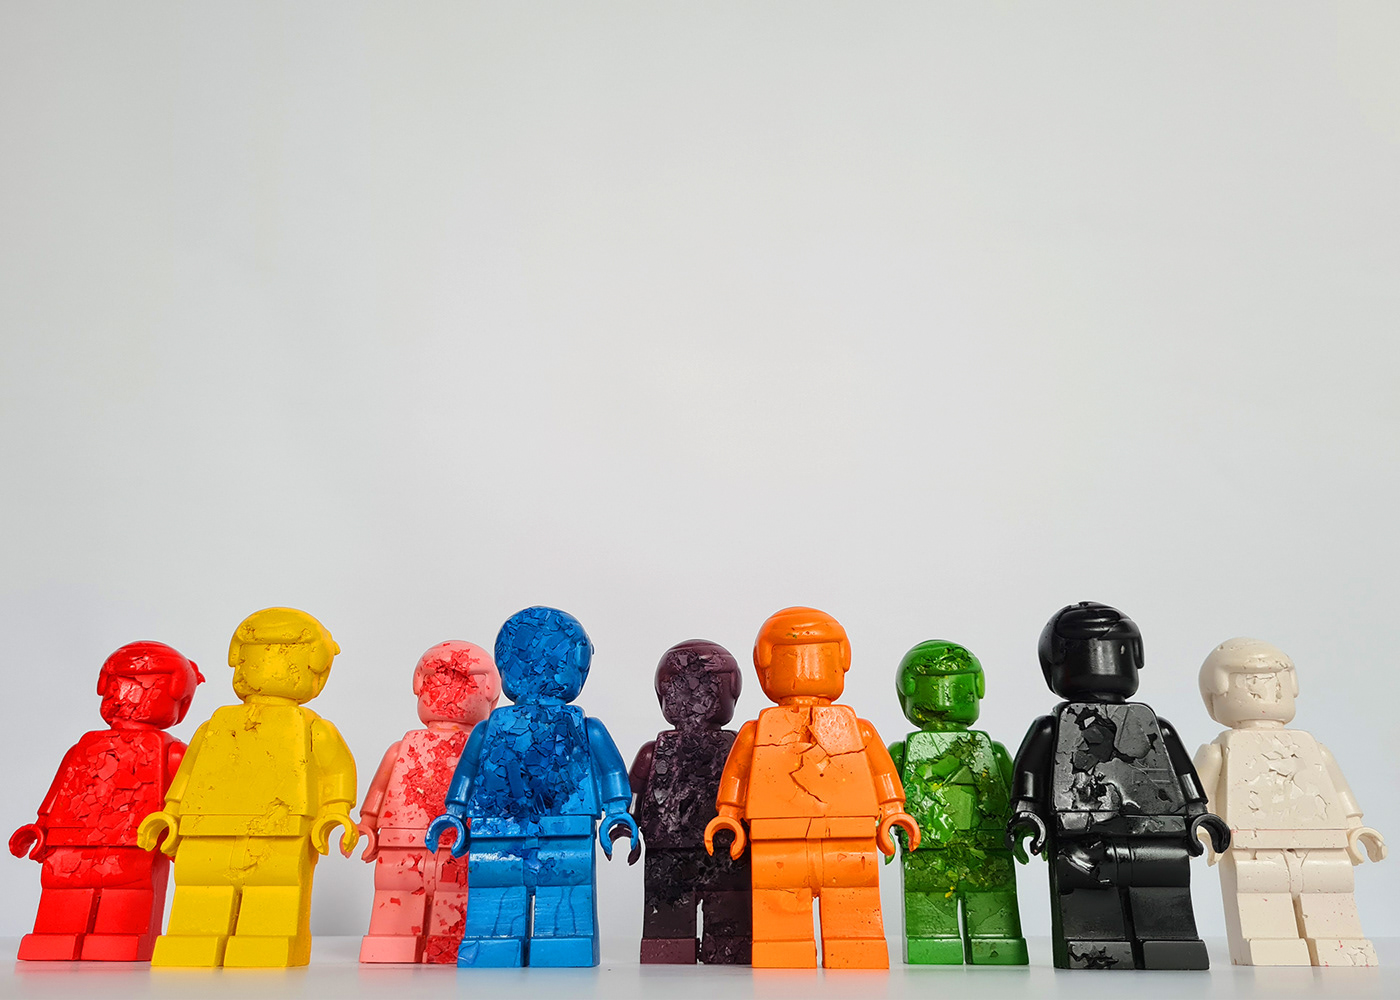 3D art toys eroded erosion figures LEGO rainbow sculpture sculpture art toys